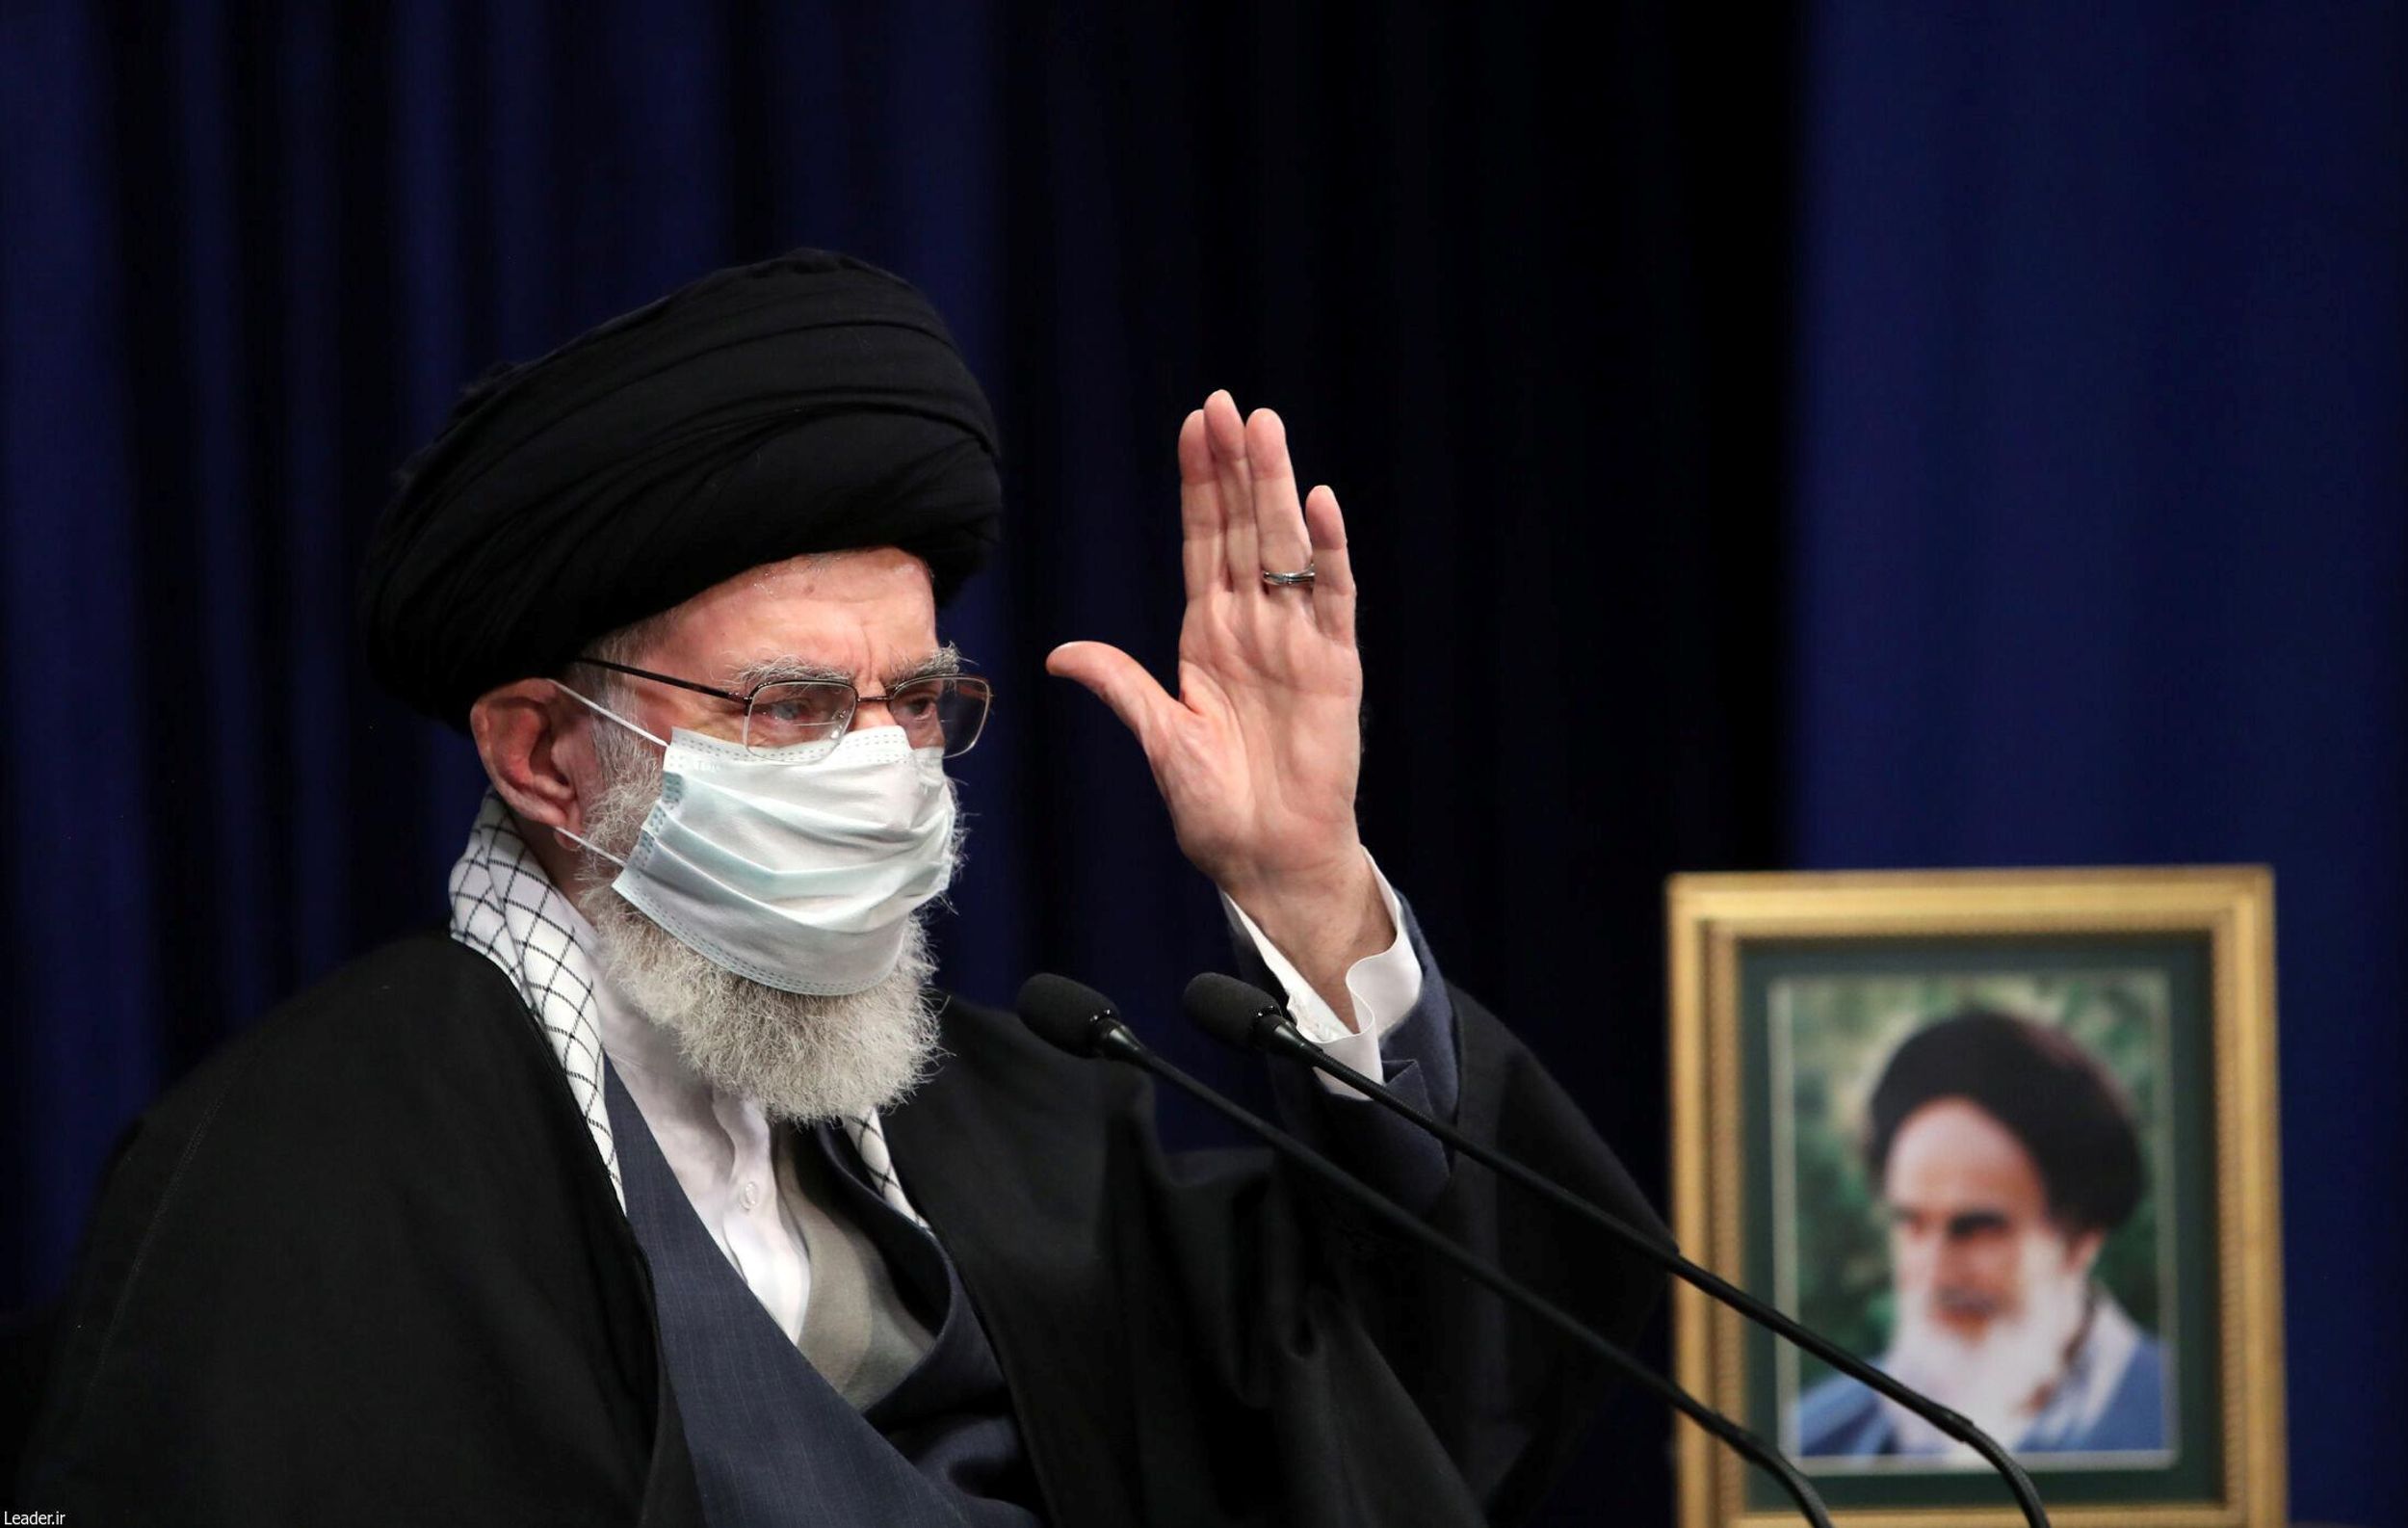 Iran's Supreme Leader Ayatollah Ali Khamenei wears a mask during a virtual speech, in Tehran, Iran February 17, 2021.